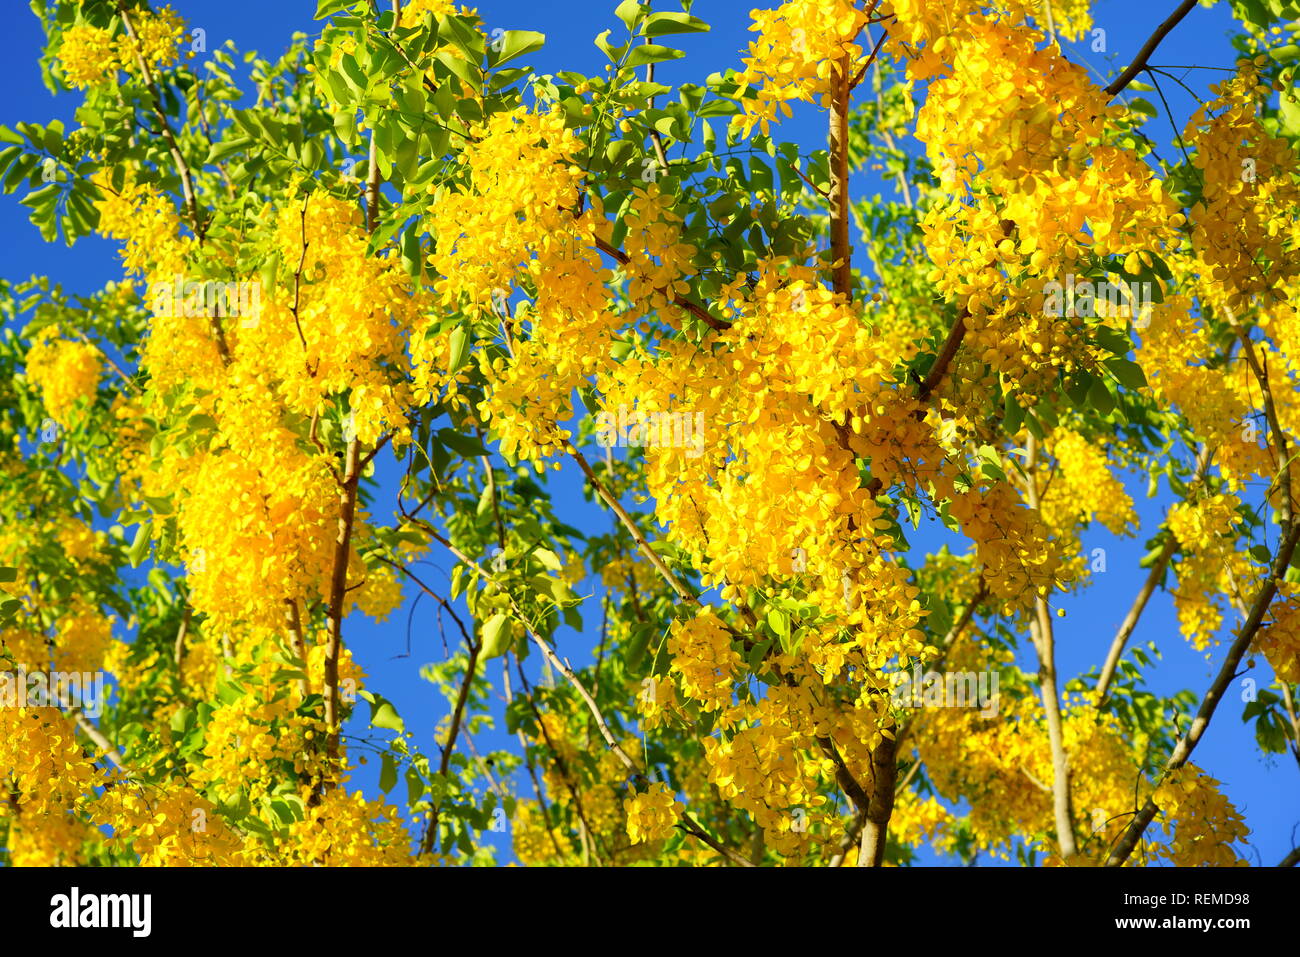 Bright yellow flowers of the Golden Shower tree (Cassia fistula) Stock Photo